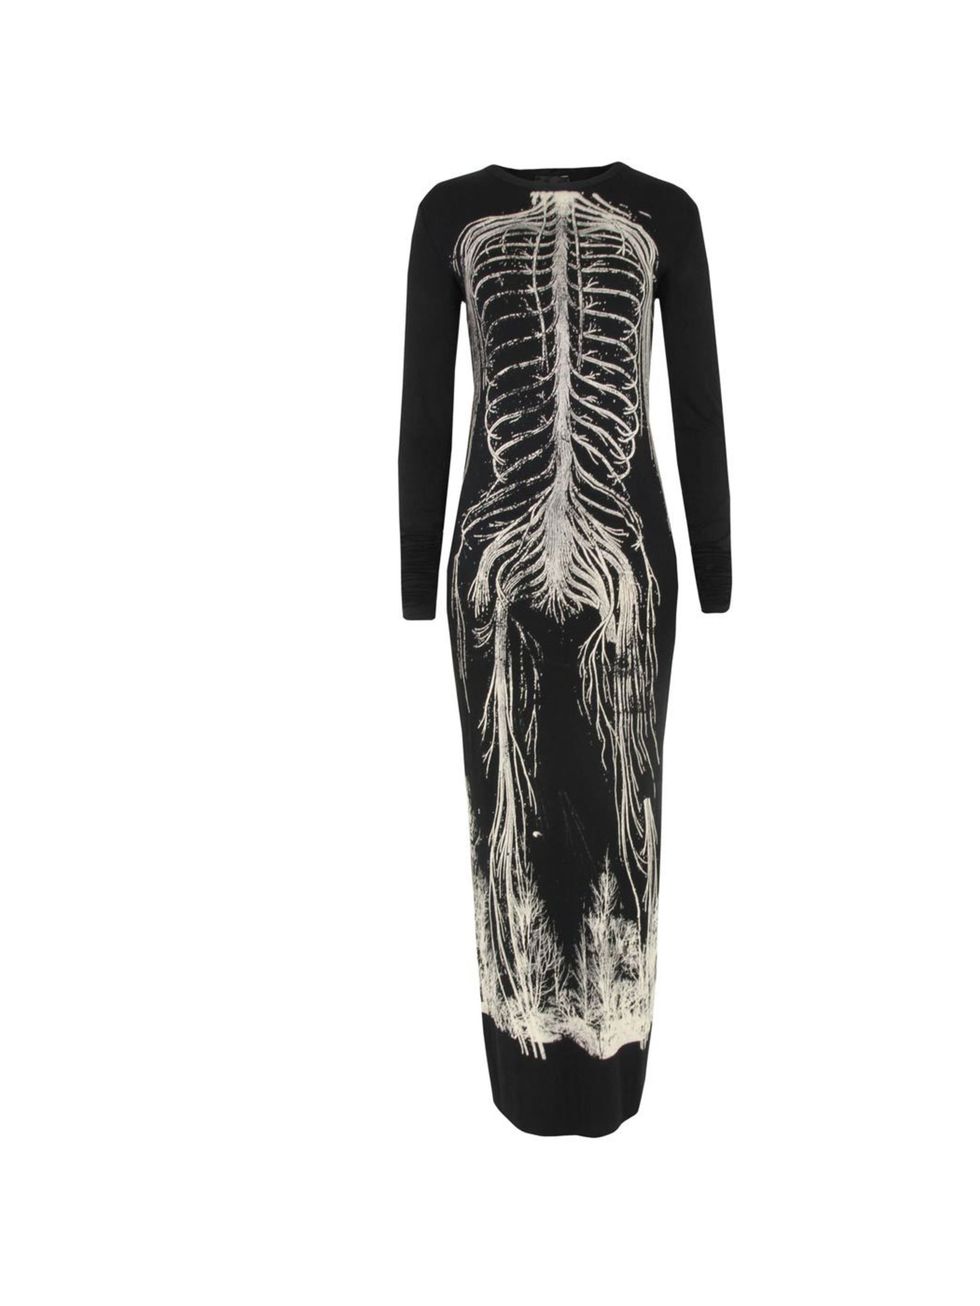 <p>Draw in Light skeleton dress, £280, at <a href="http://www.coggles.com/item/Draw-In-Light/Bones-Long-Sleeve-Black-Dress/B3KP">Coggles.com</a></p>